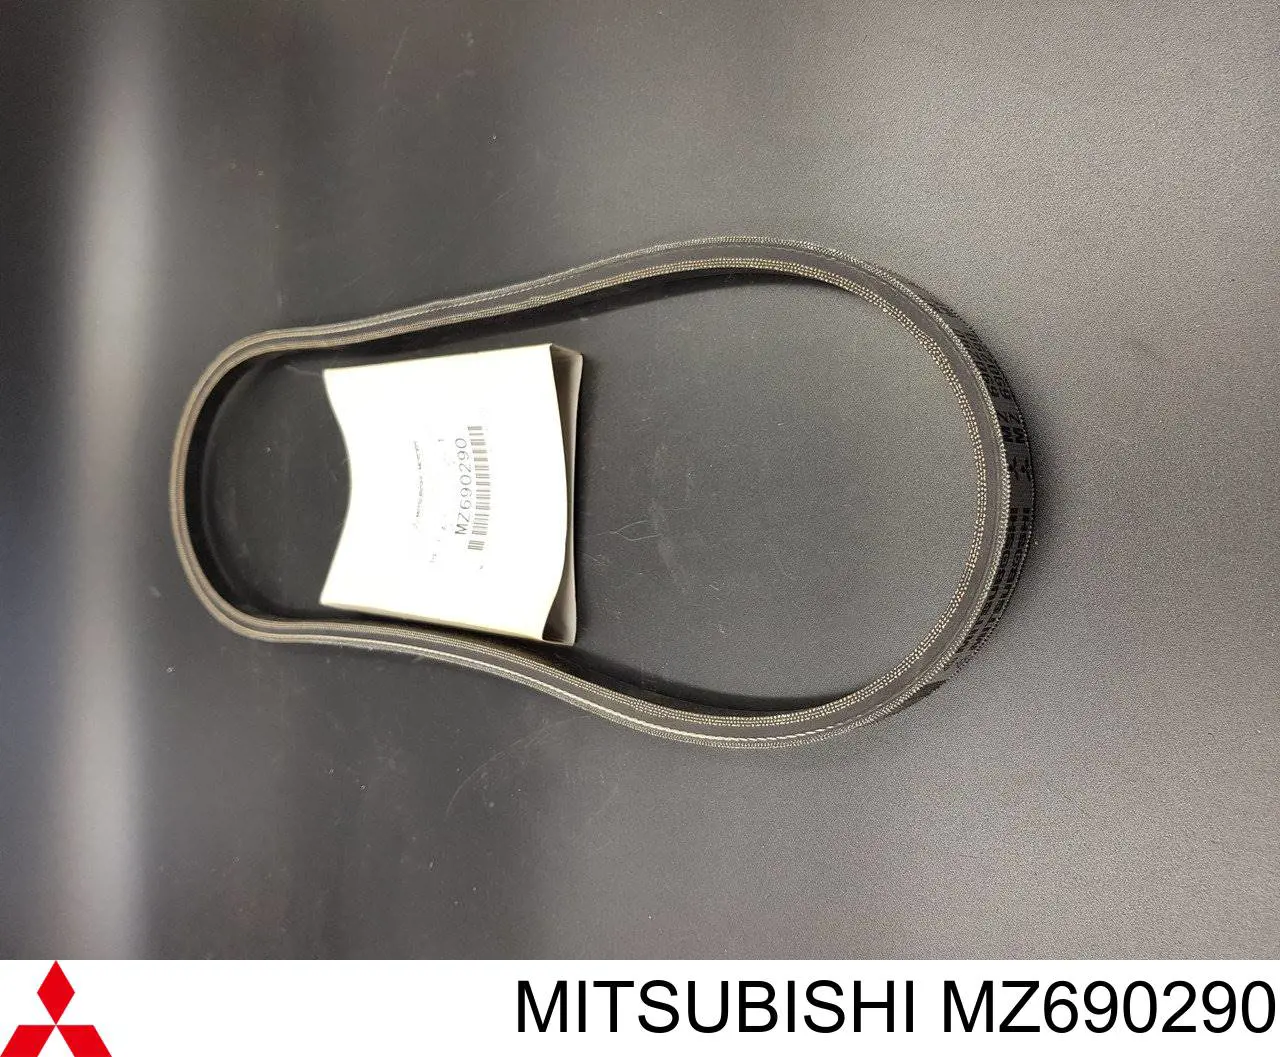 MZ690290 Mitsubishi correa trapezoidal